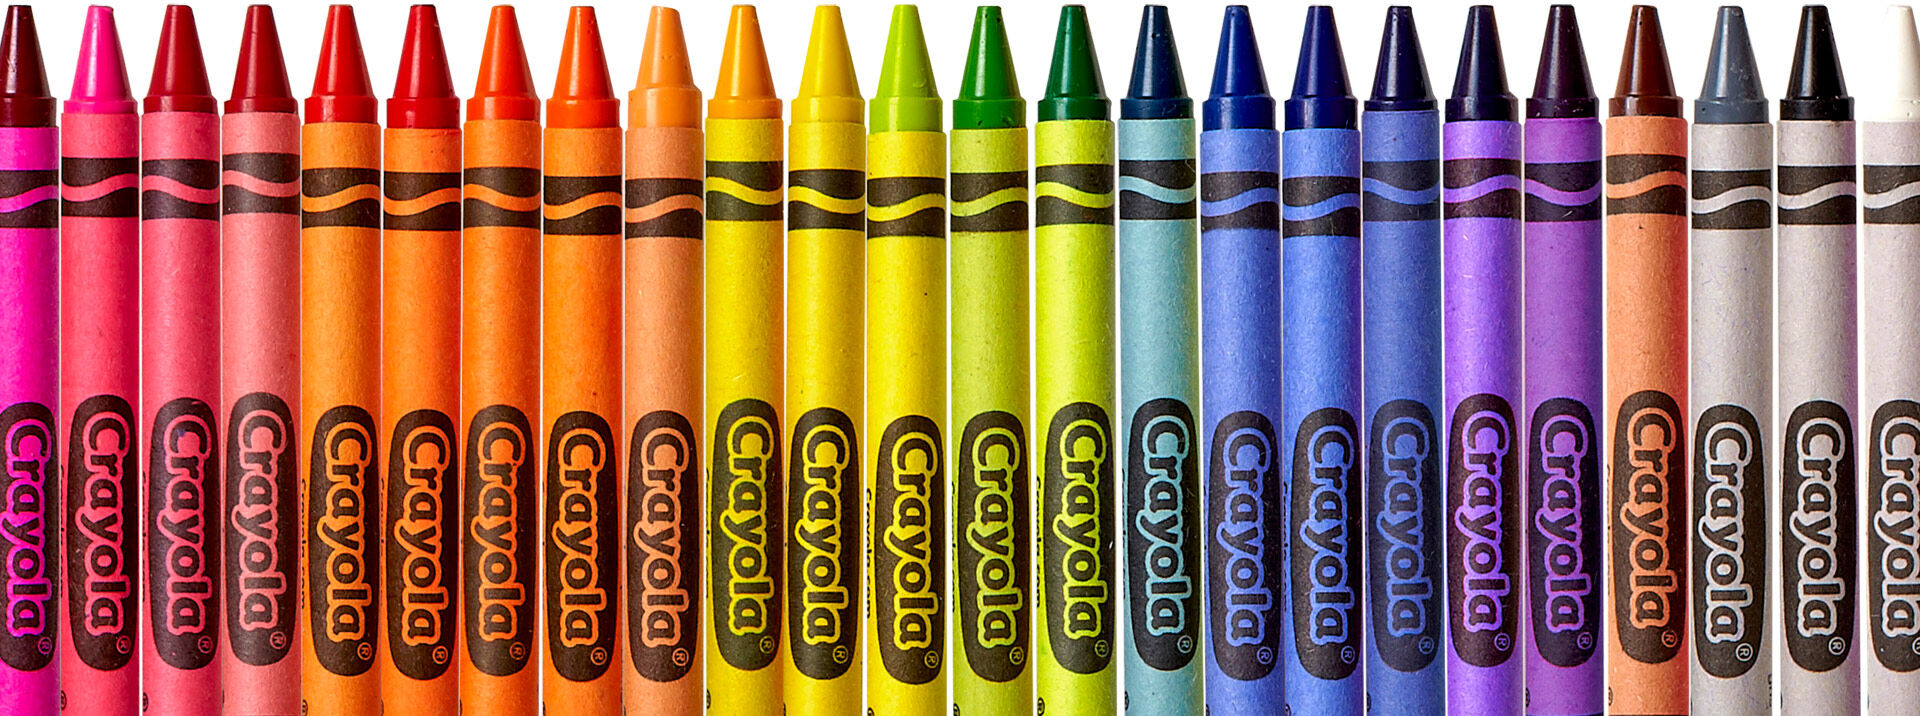 Crayola Crayons Shop Crayon Packs Boxes Crayola Coloring Wallpapers Download Free Images Wallpaper [coloring436.blogspot.com]